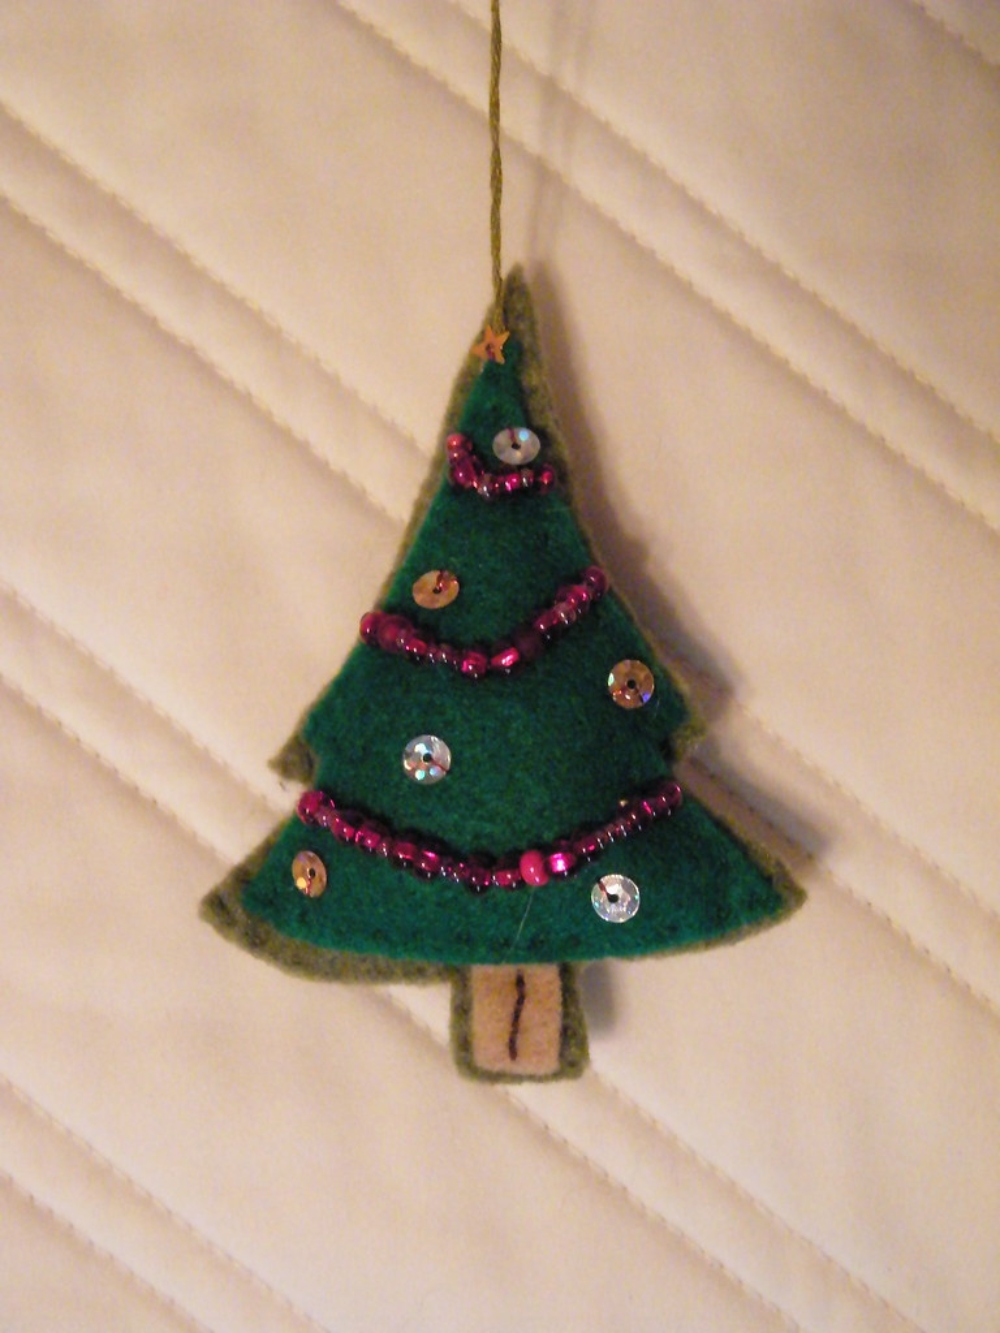 An image of a felt Christmas tree ornament.